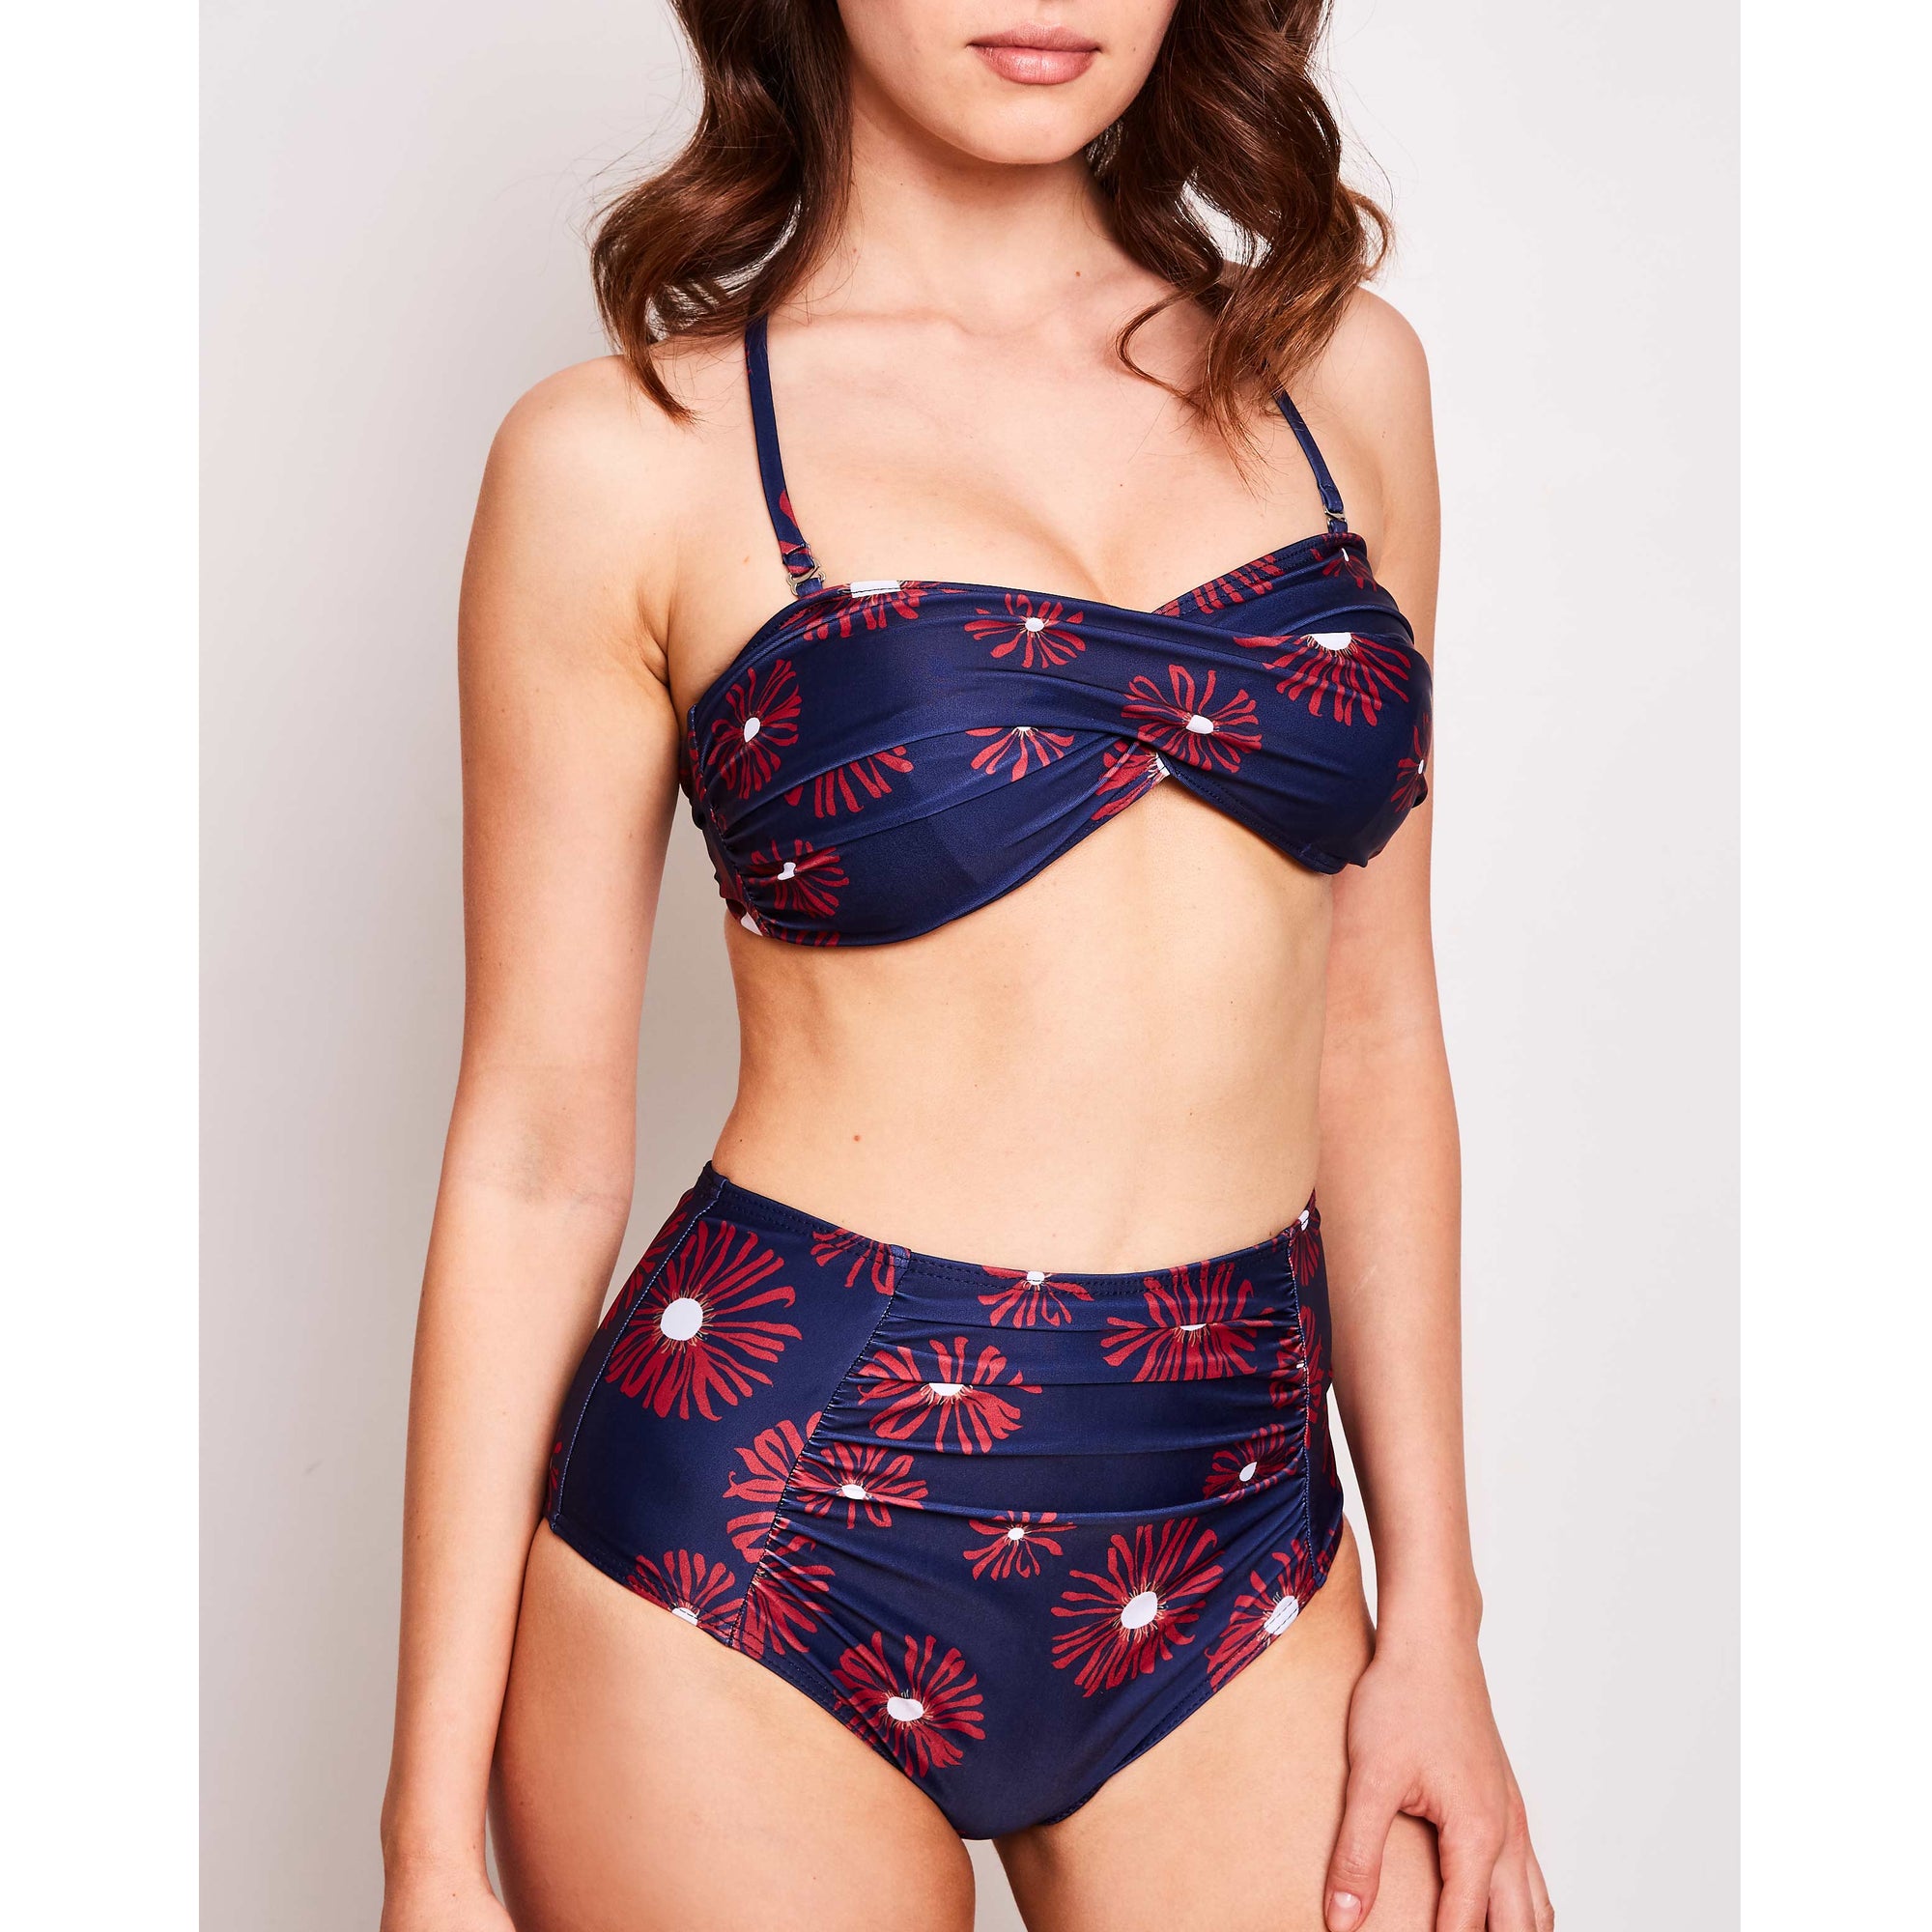 Erica-bikini-flowers-navy-2-contessa-volpi-summer-swimwear-collection